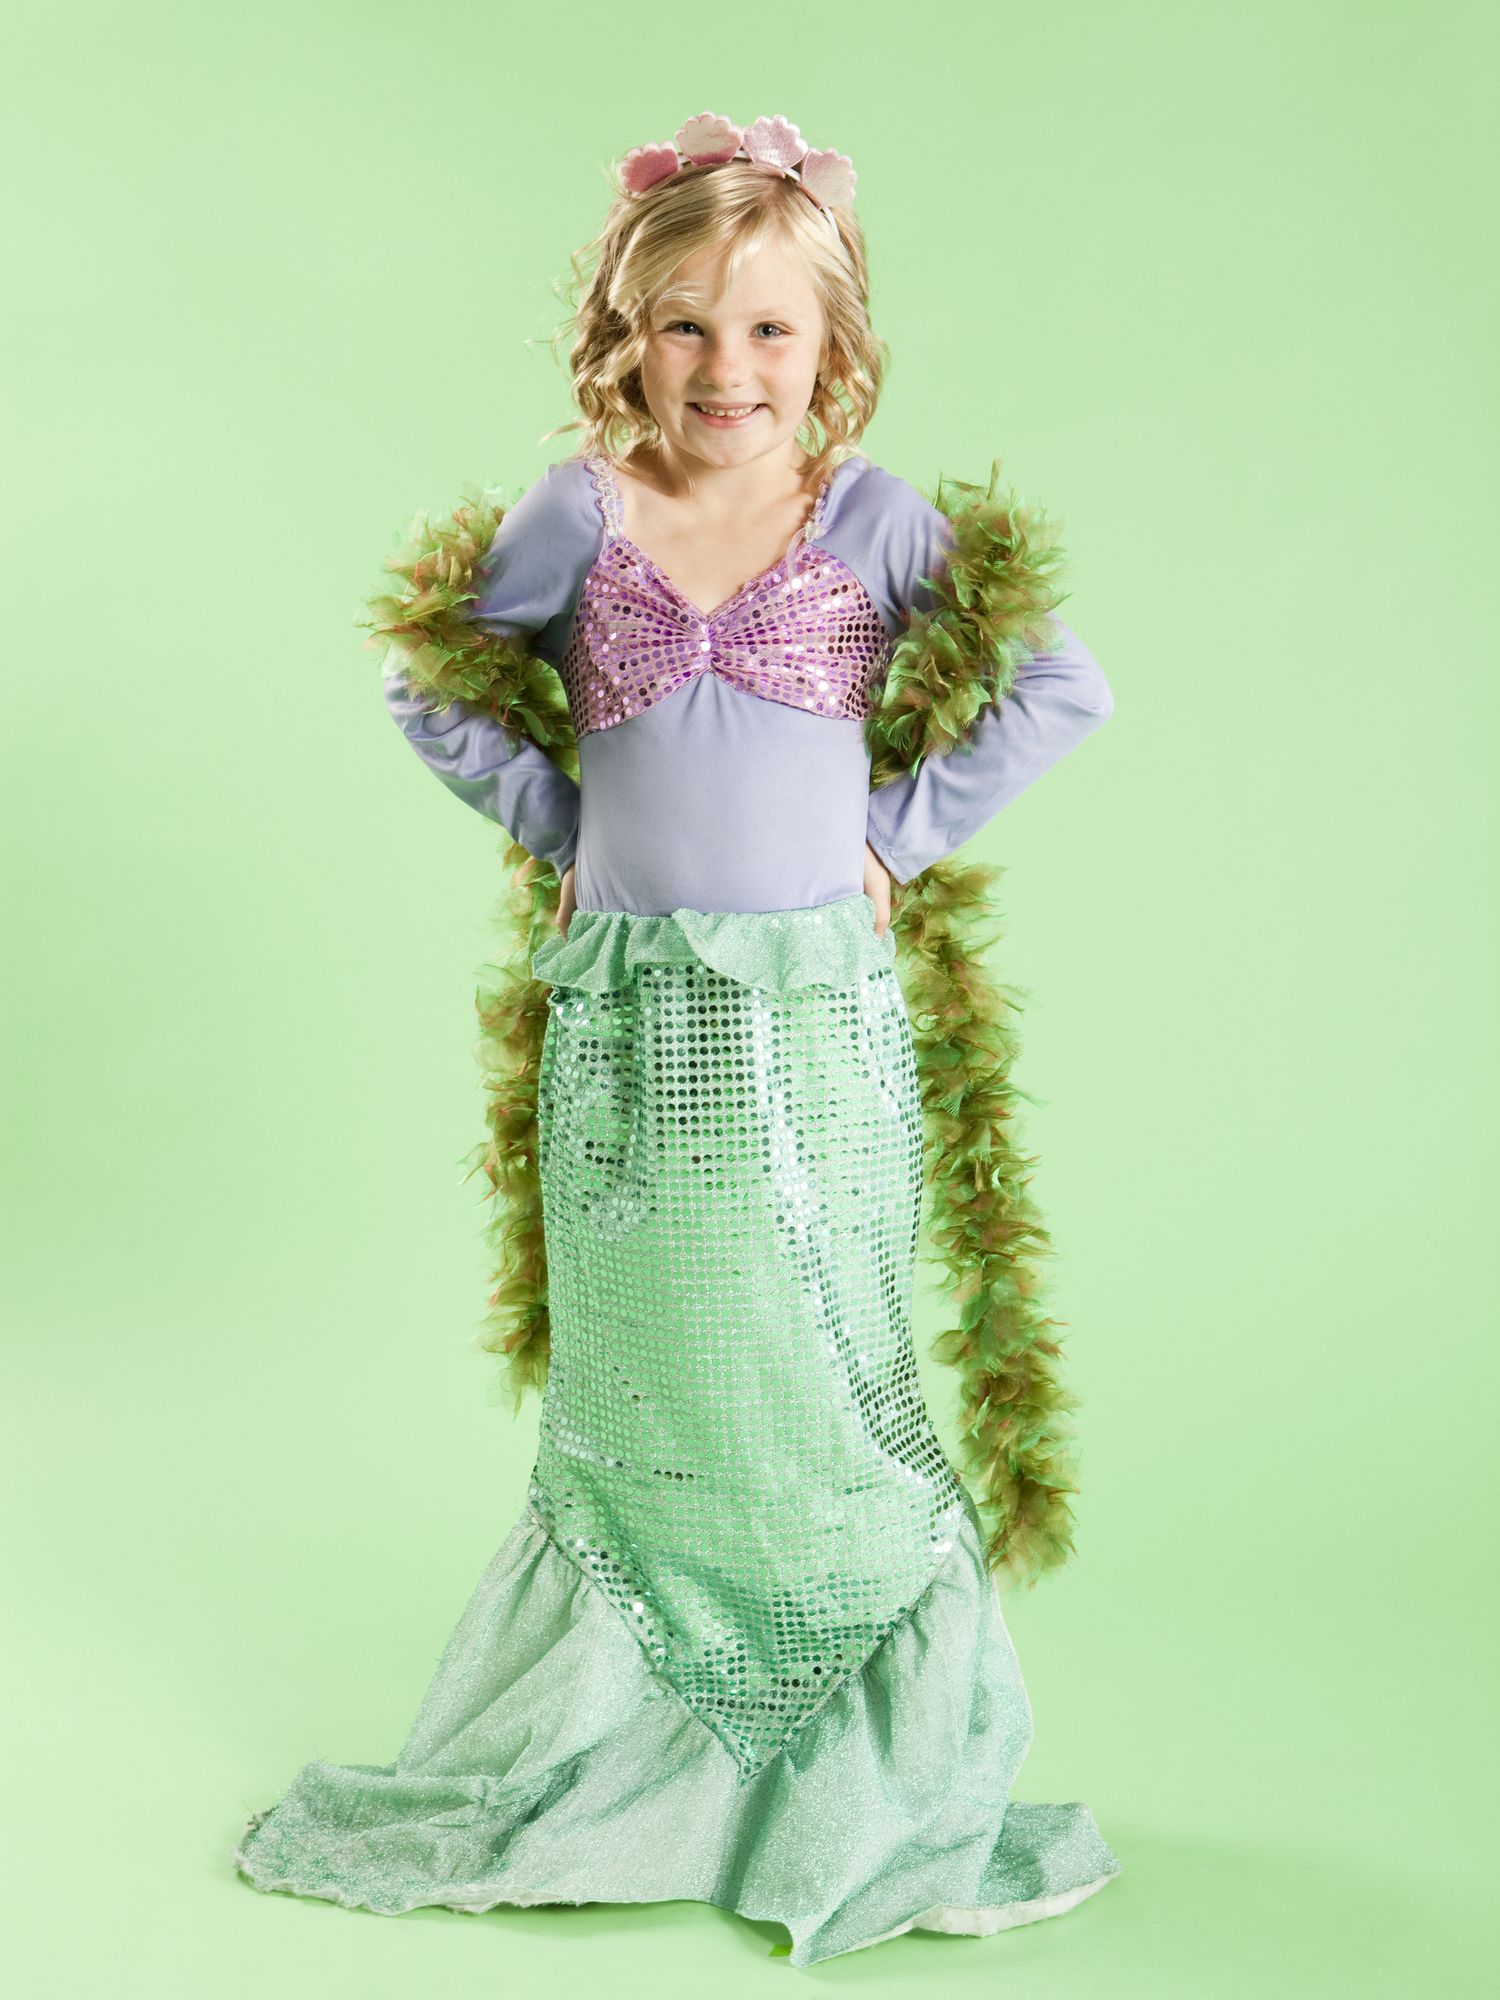 Childrens Costume Book Day Girls Mermaid Seahorse Fancy Dress 